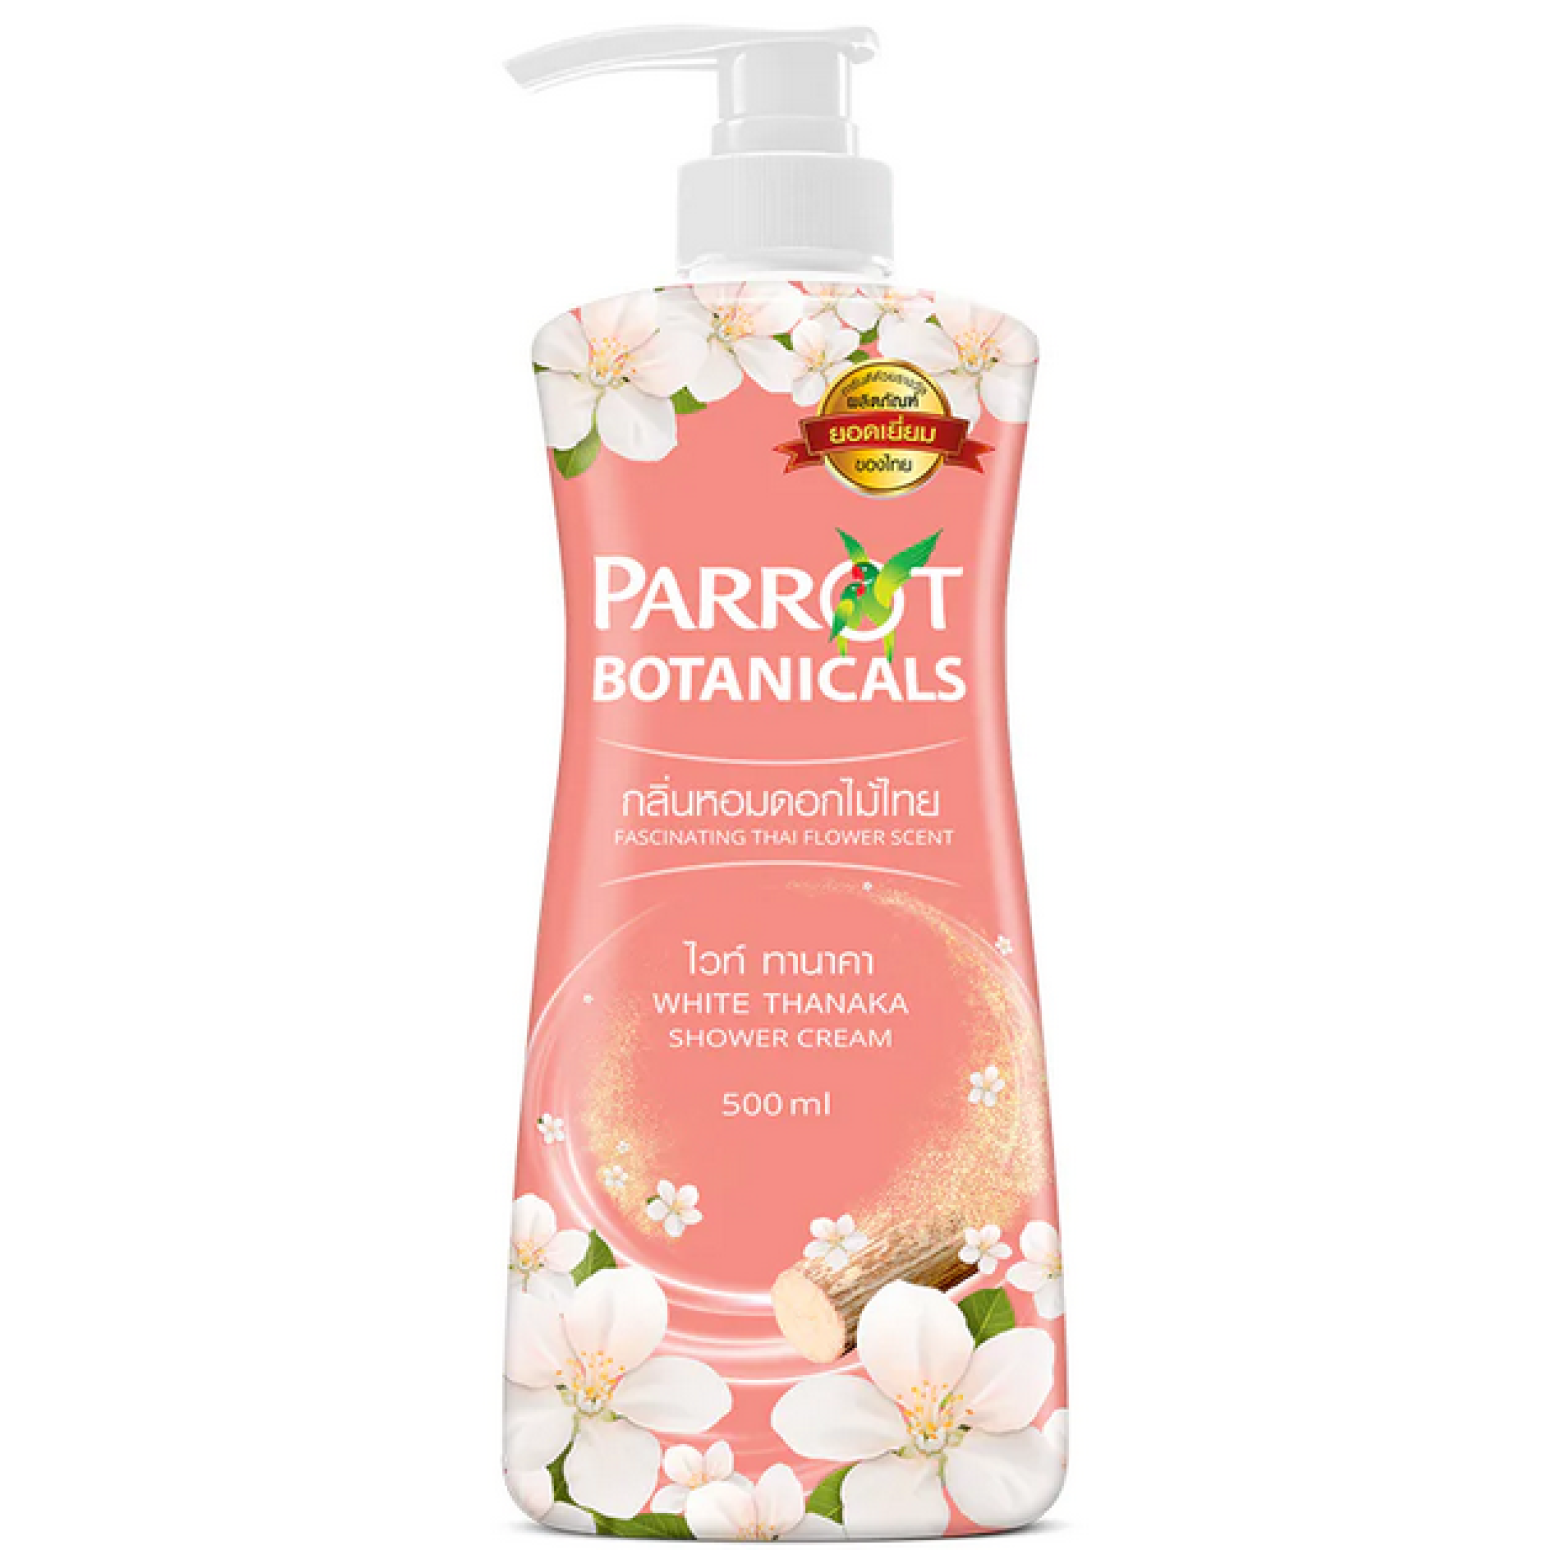 Parrot Botanical White Thanaka Shower Cream 500ml